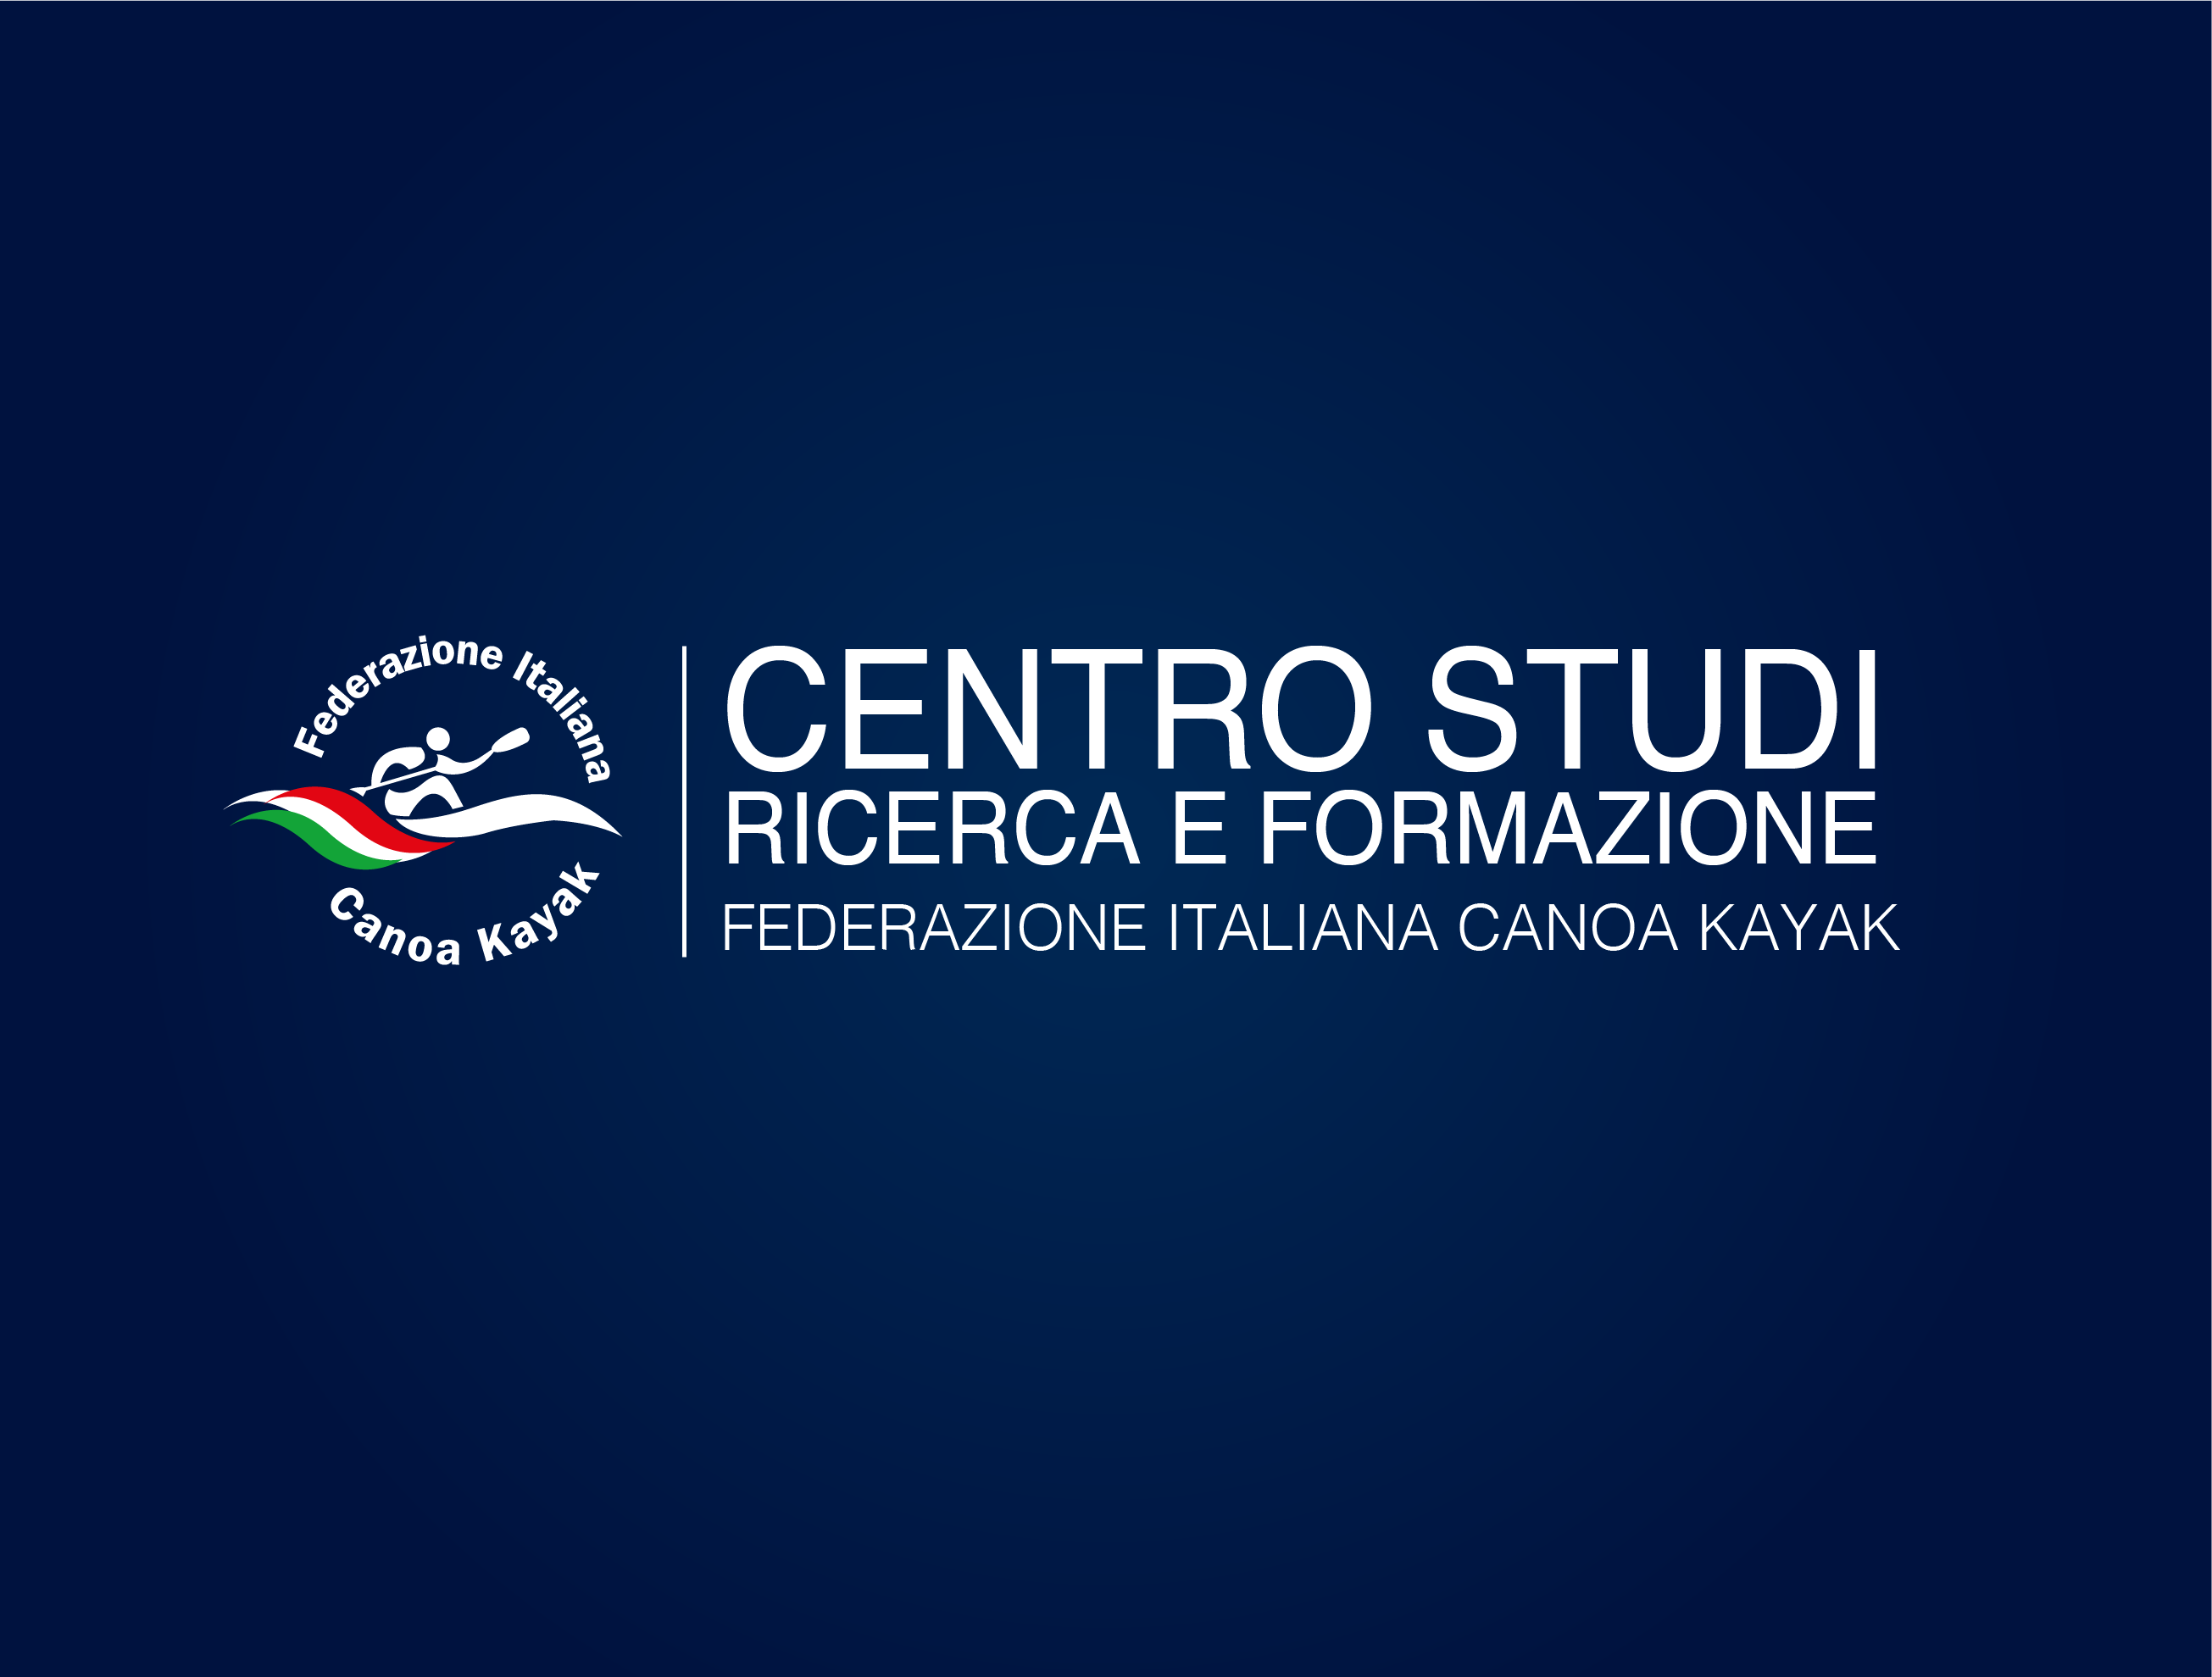 images/centrostudi/Centro_Studi_Logo-01.png